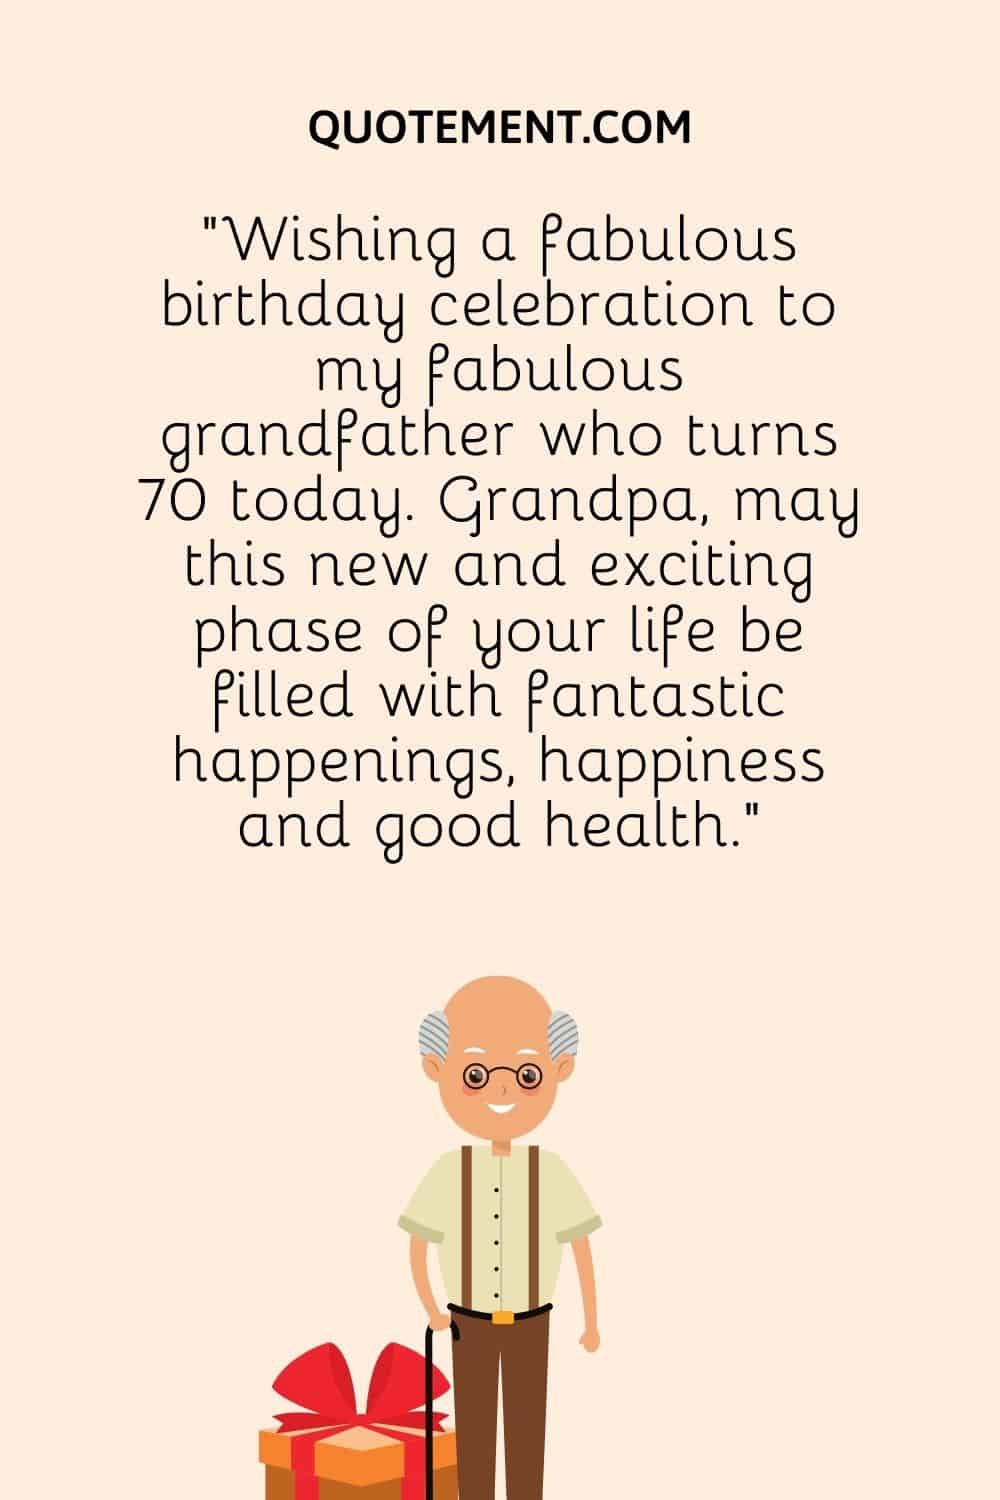 Wishing a fabulous birthday celebration to my fabulous grandfather who turns 70 today